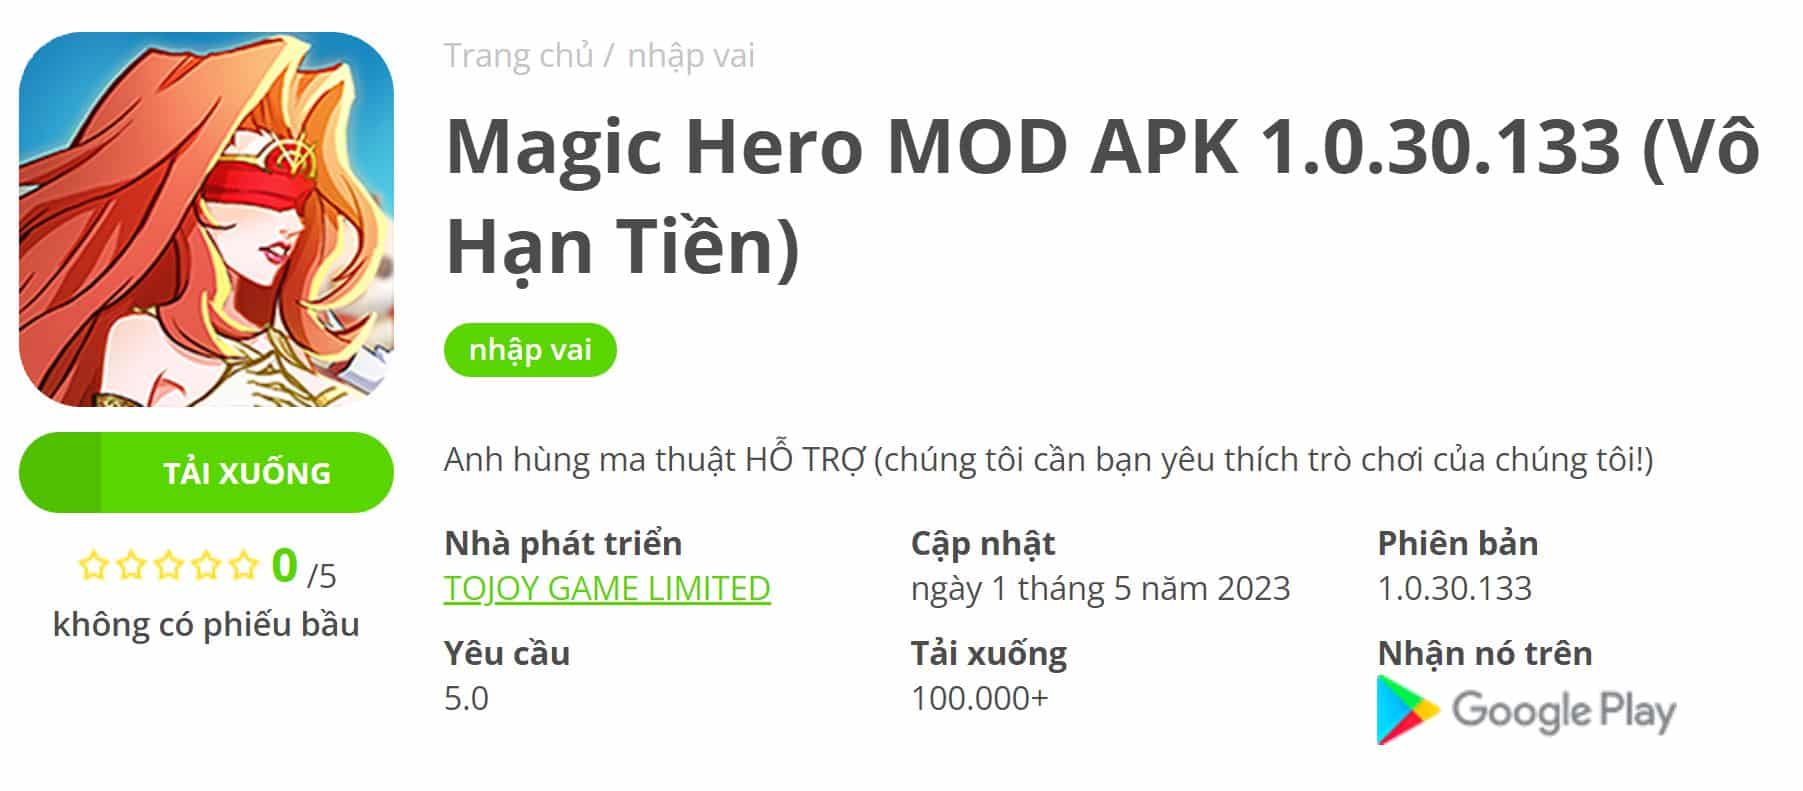 Magic Hero MOD APK 1.0.30.133